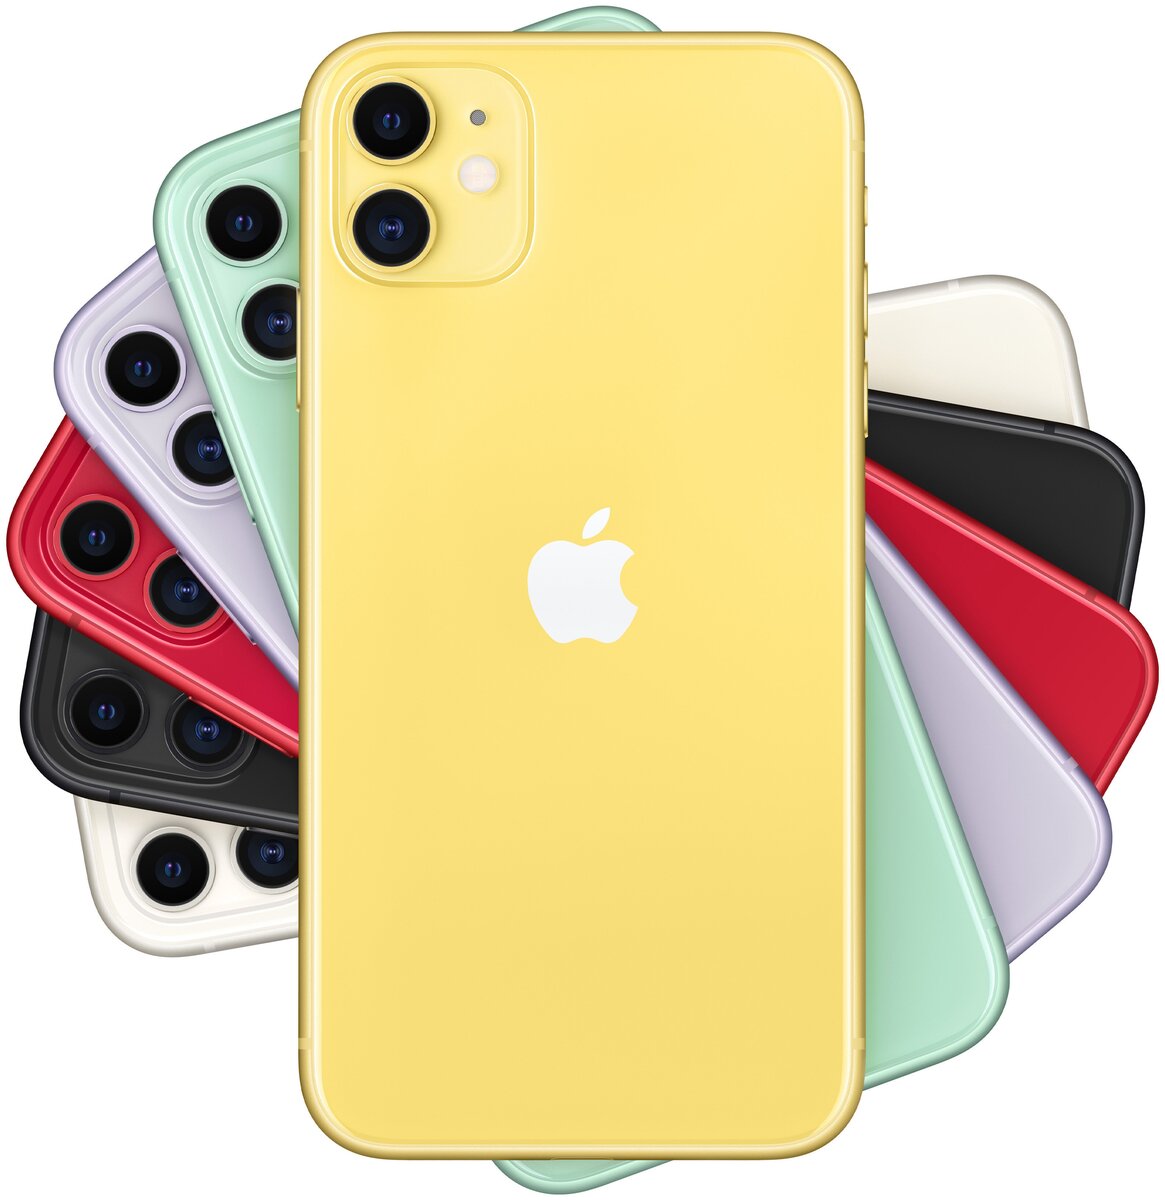 Apple iPhone 11 iPhone 256 GB 15.5 cm (6.1 inch) Yellow iOS 13 | Conrad.com